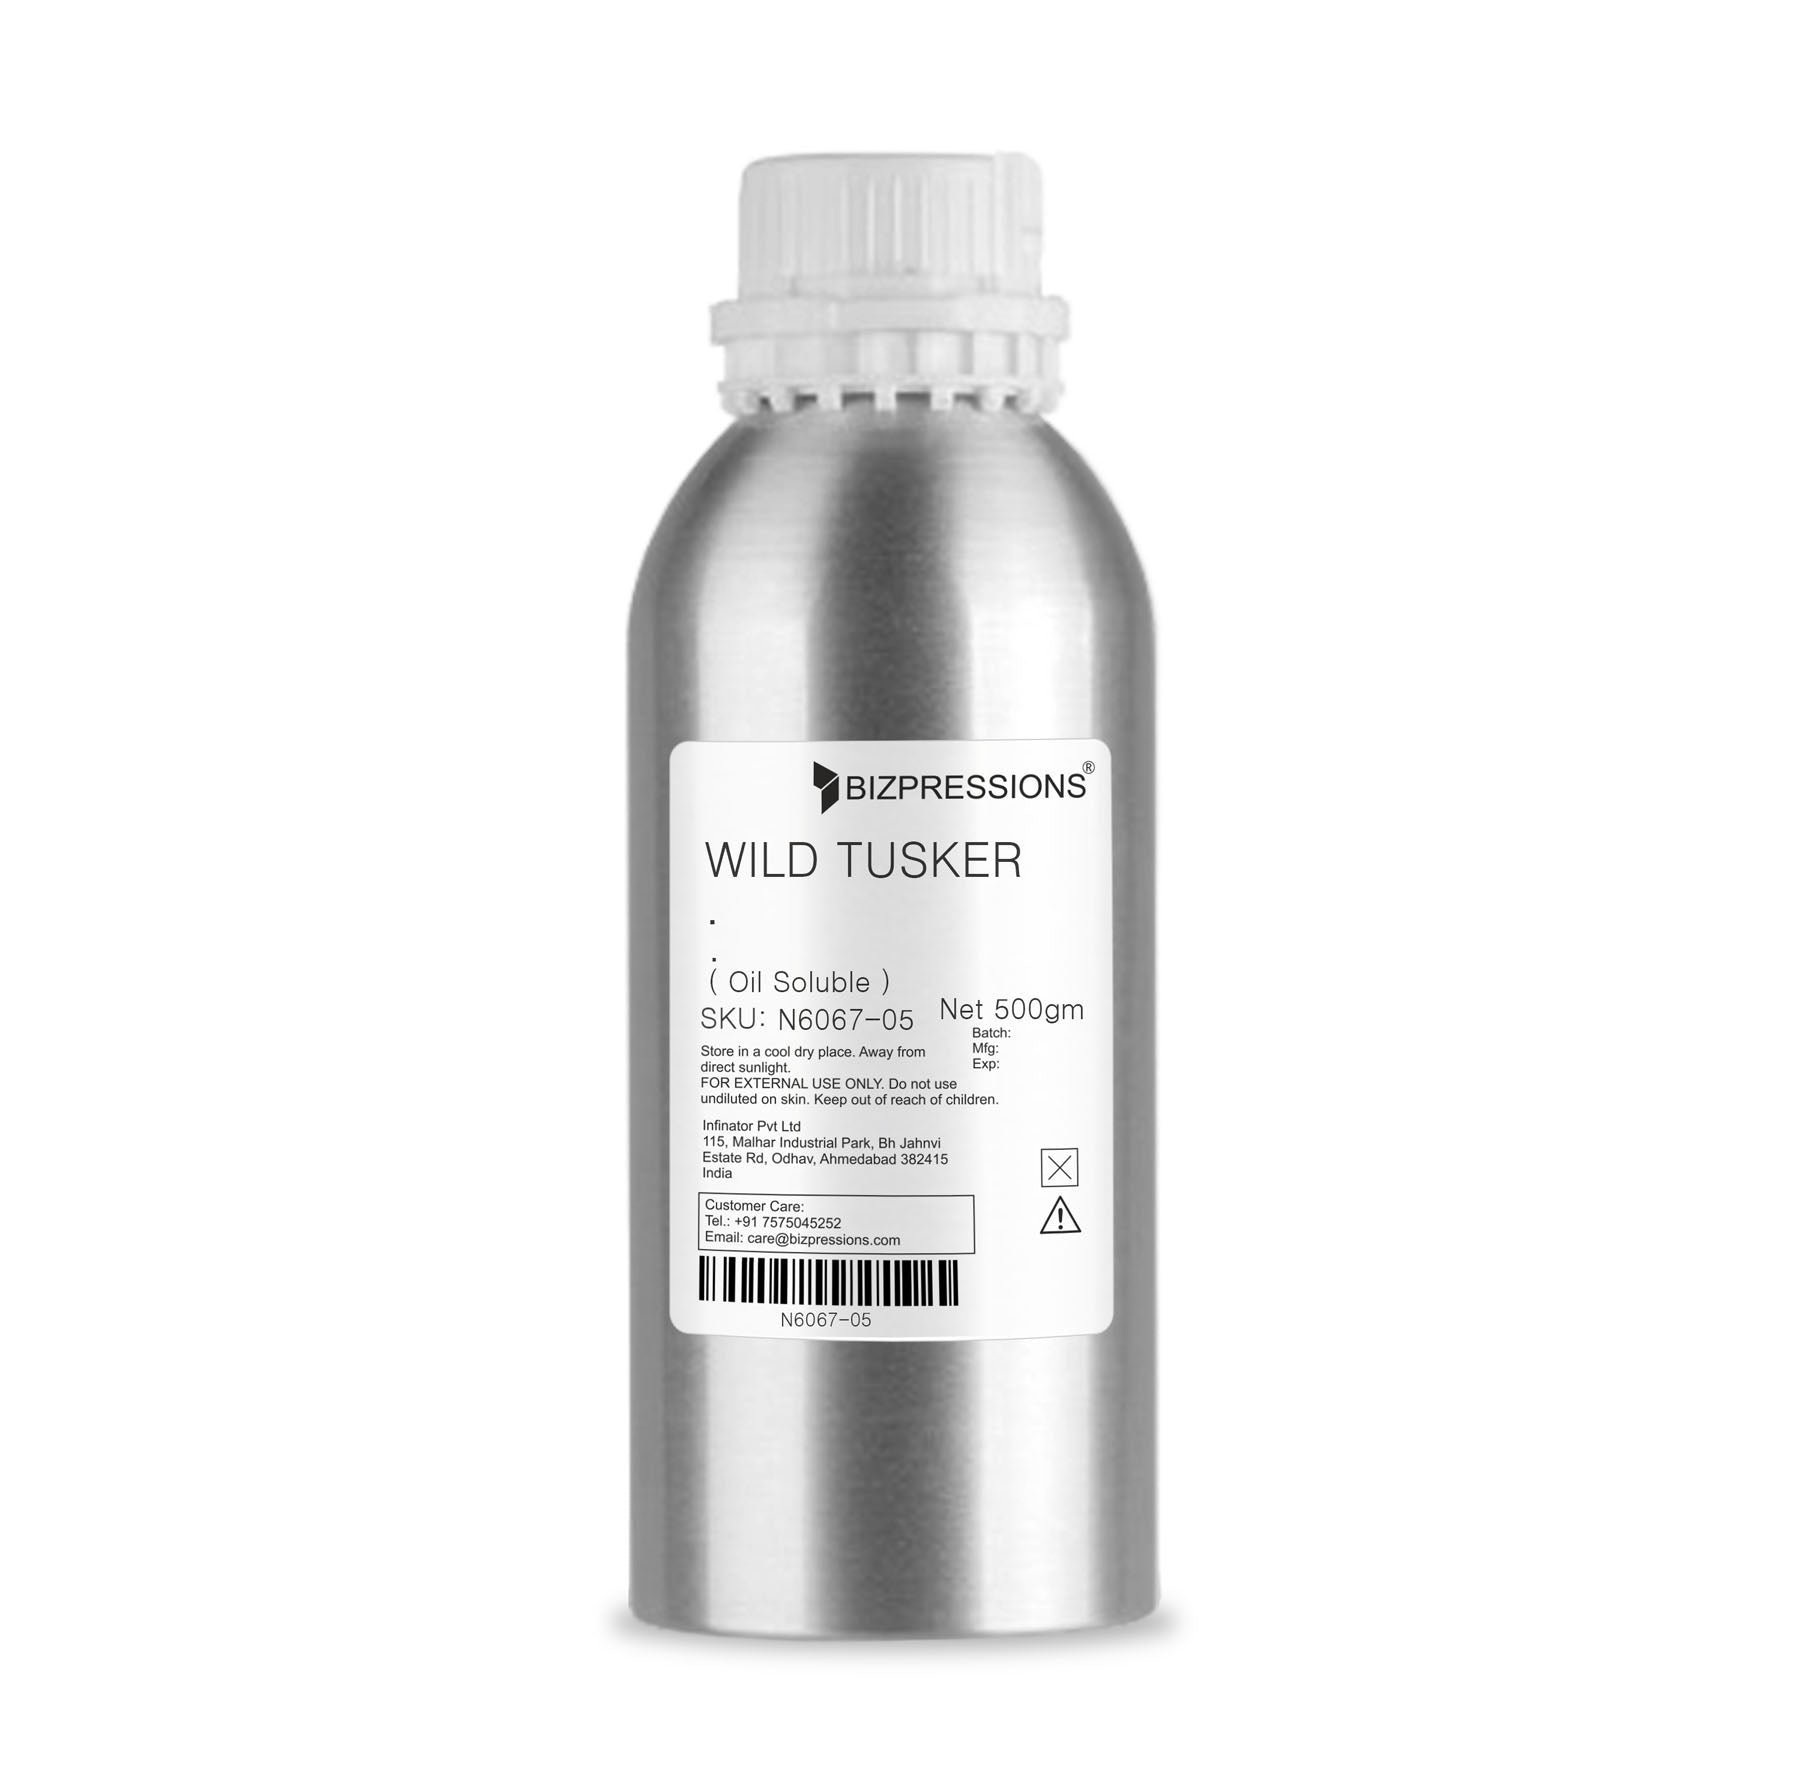 WILD TUSKER - Fragrance ( Oil Soluble ) - 500 gm